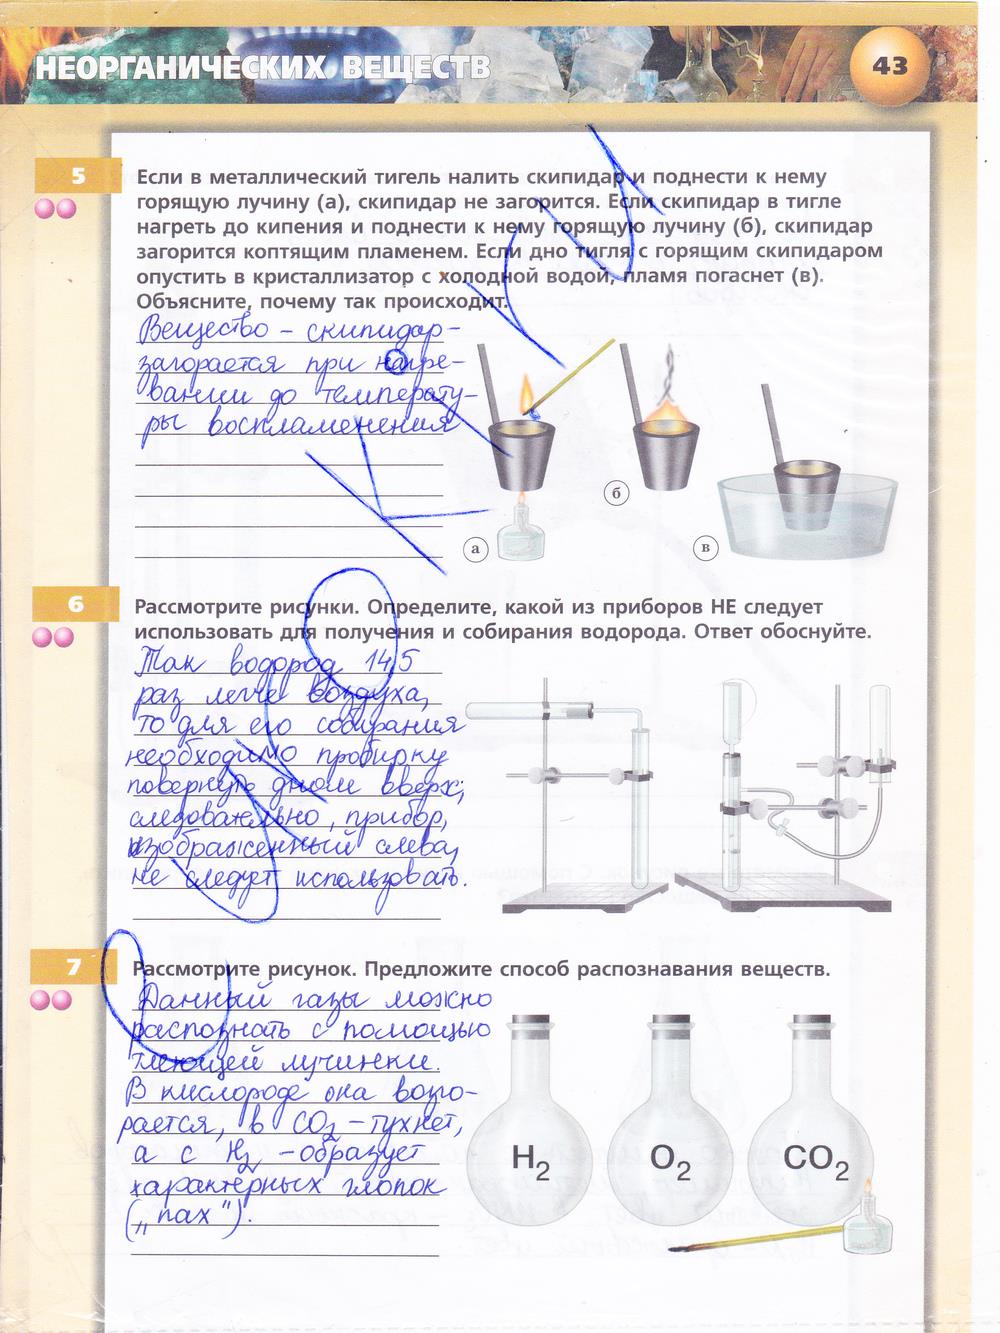 гдз 8 класс тетрадь-тренажёр страница 43 химия Гара